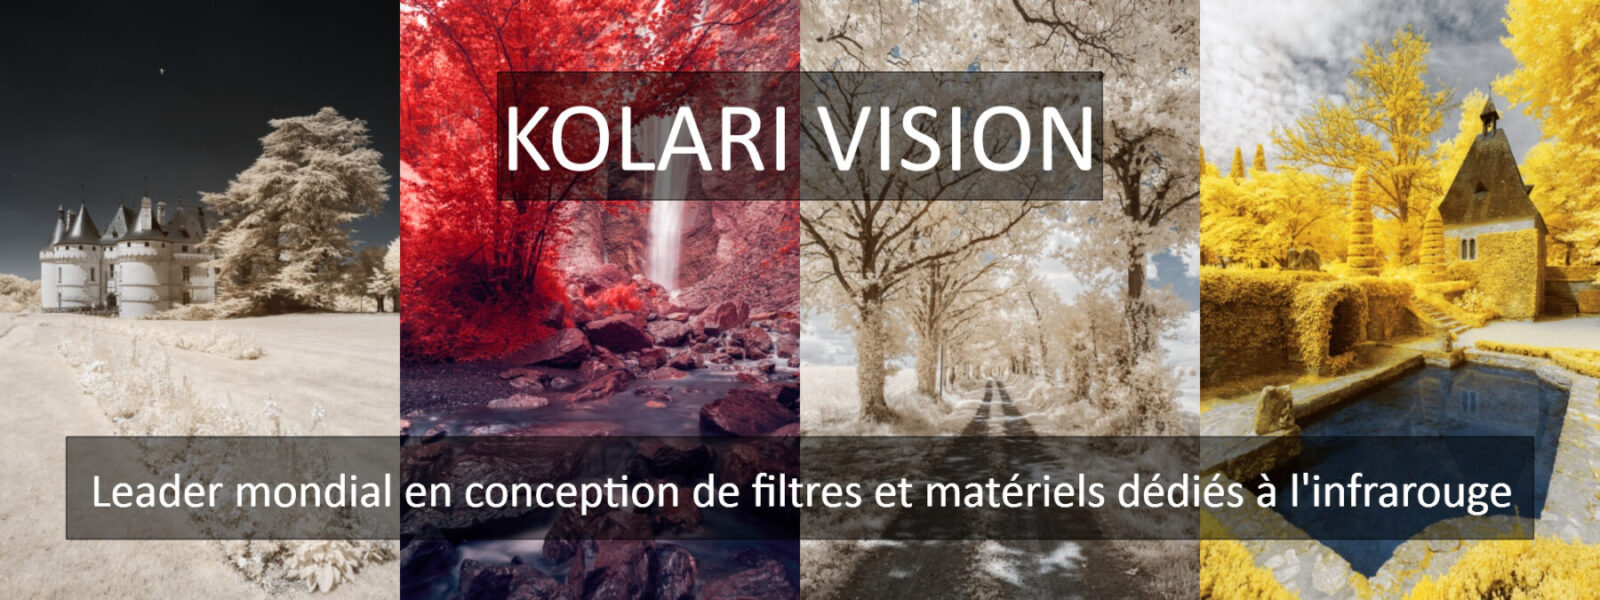 banniere_publicite_kolari_vision